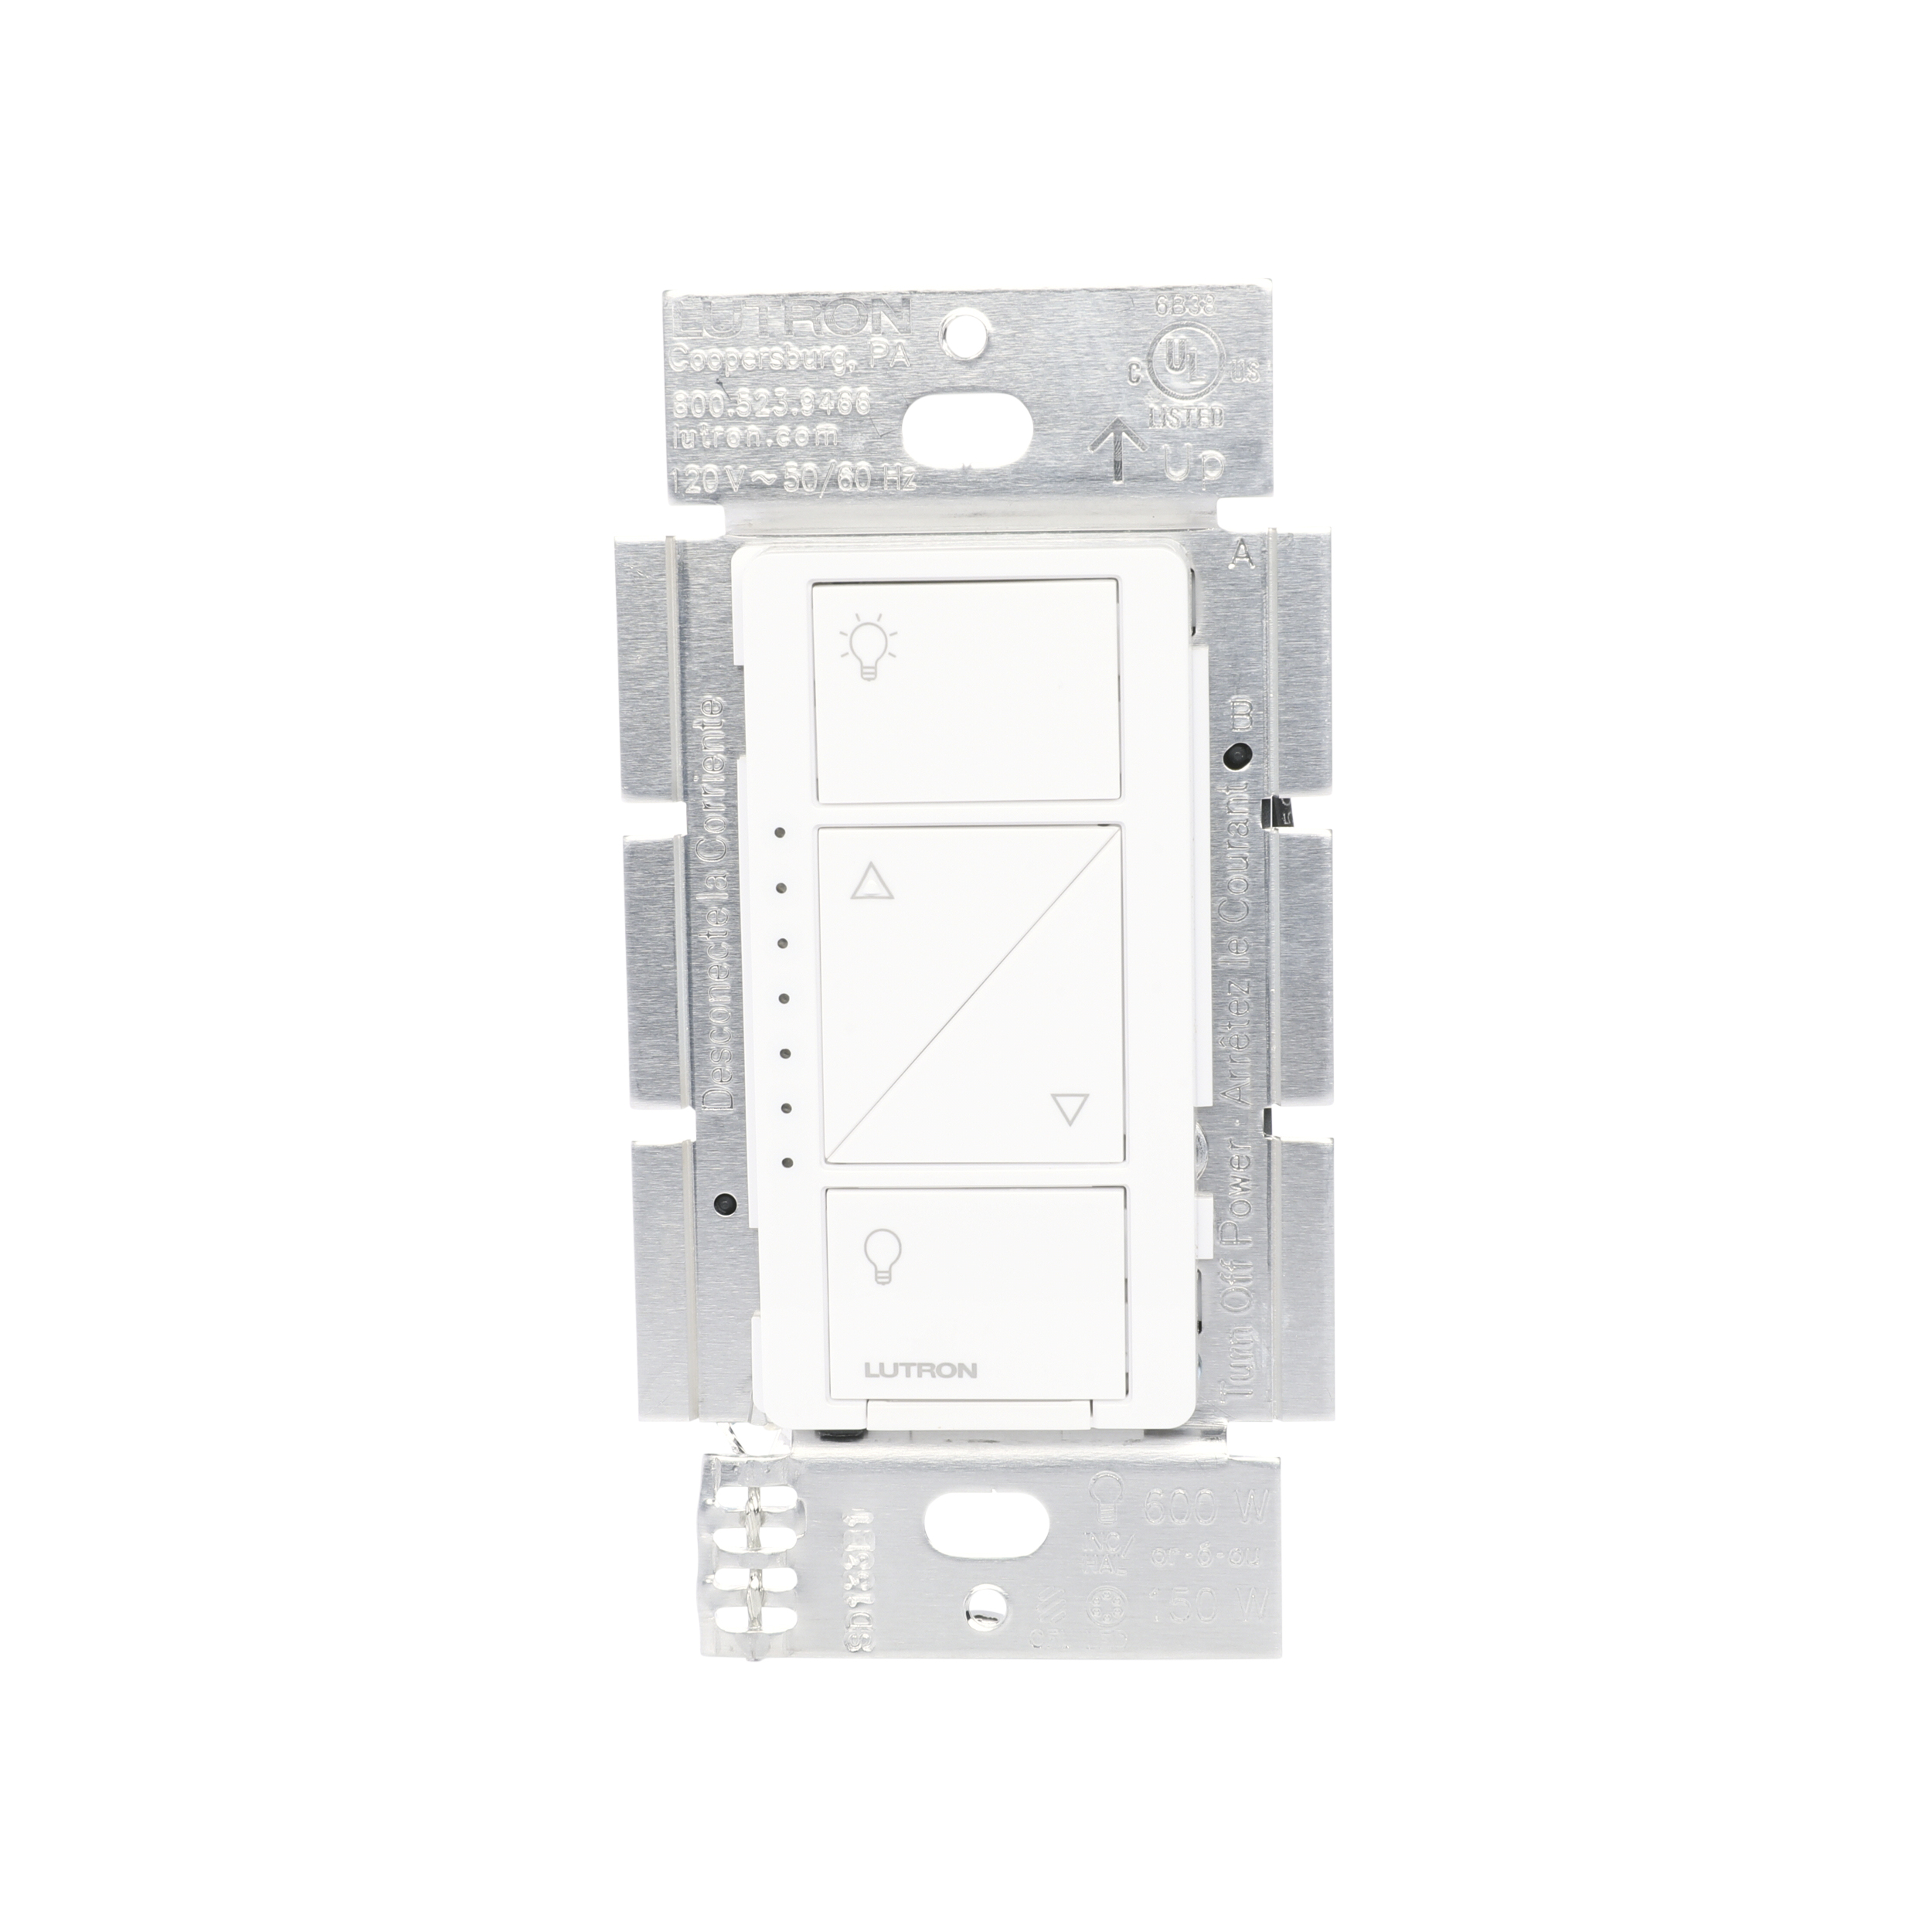 Lutron P-DIM-3WAY-WH Caseta 3-Way Smart Dimmer Switch Kit White